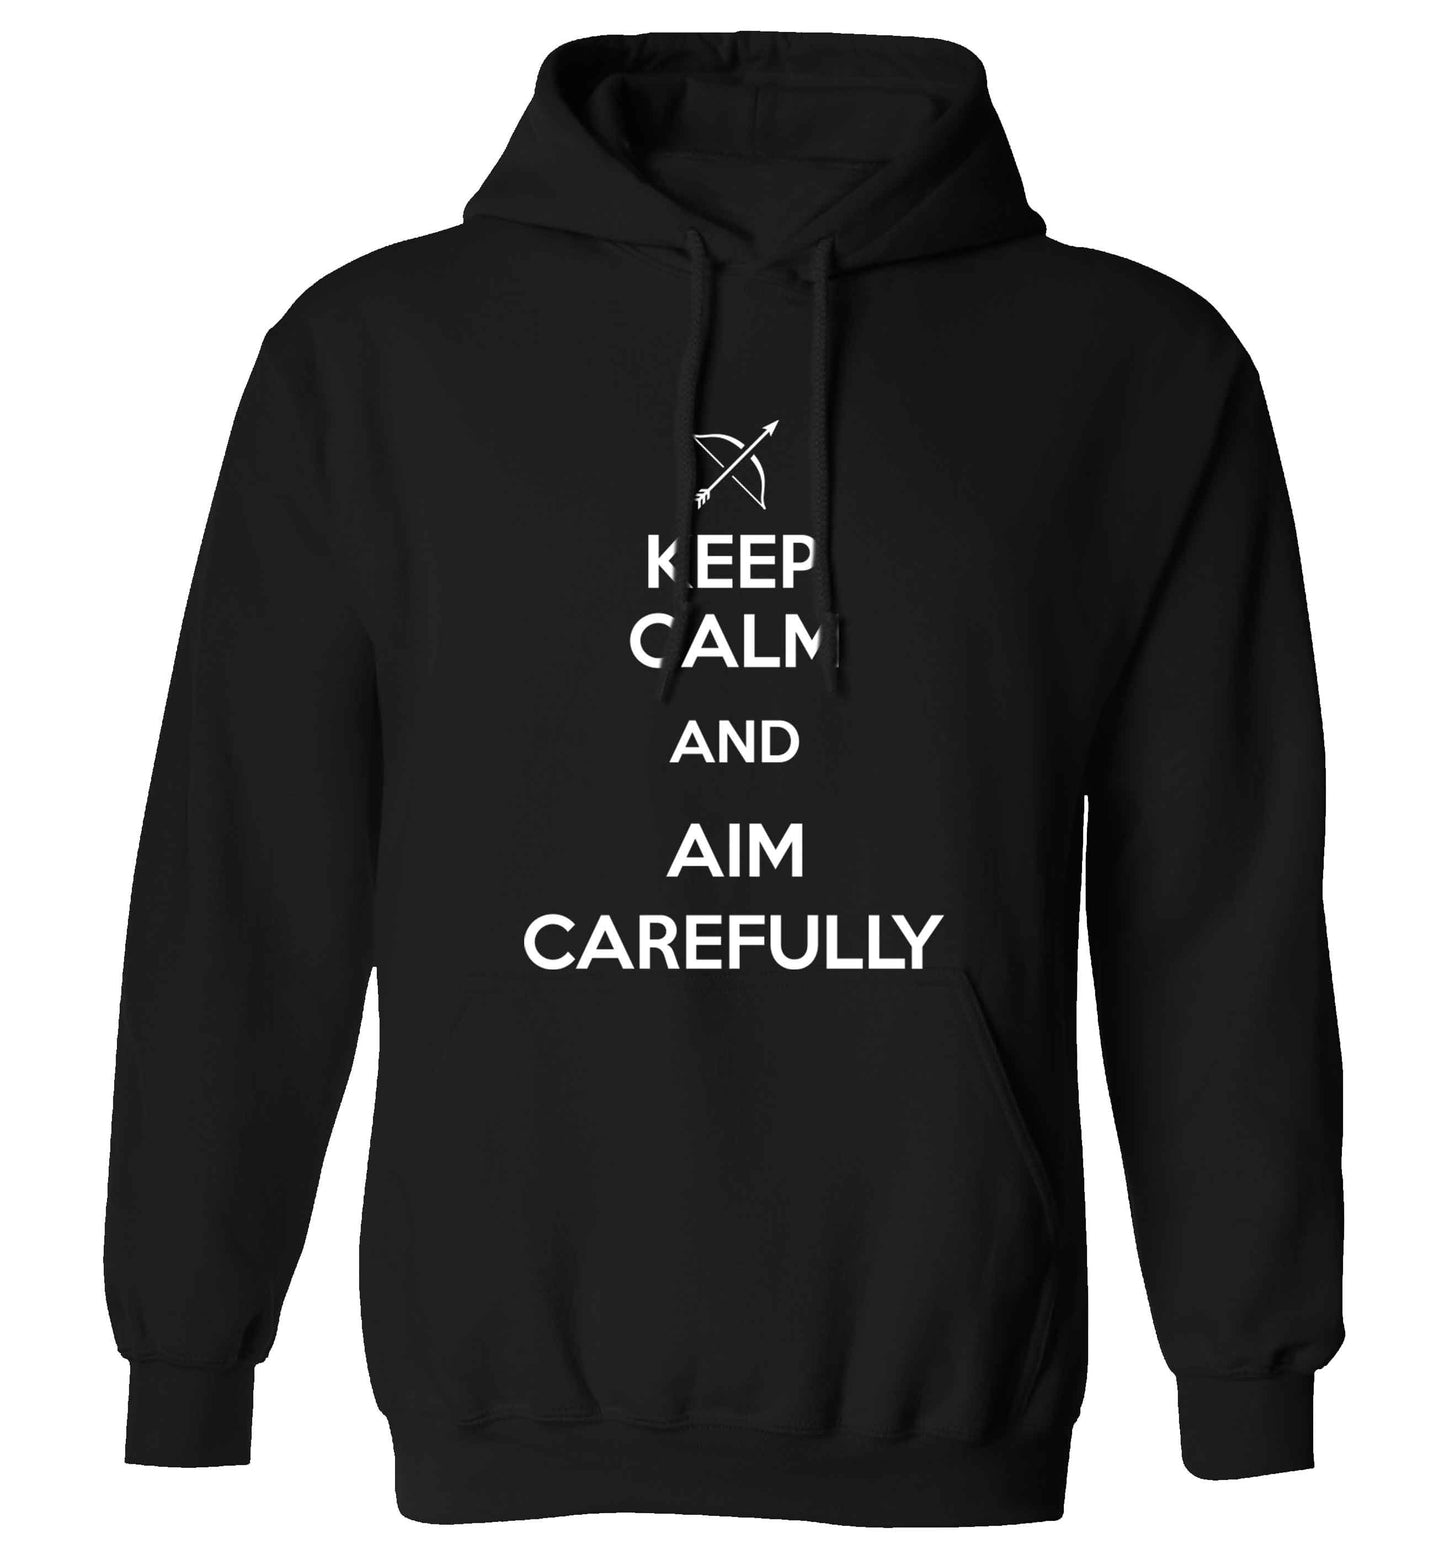 Keep calm and aim carefully adults unisex black hoodie 2XL